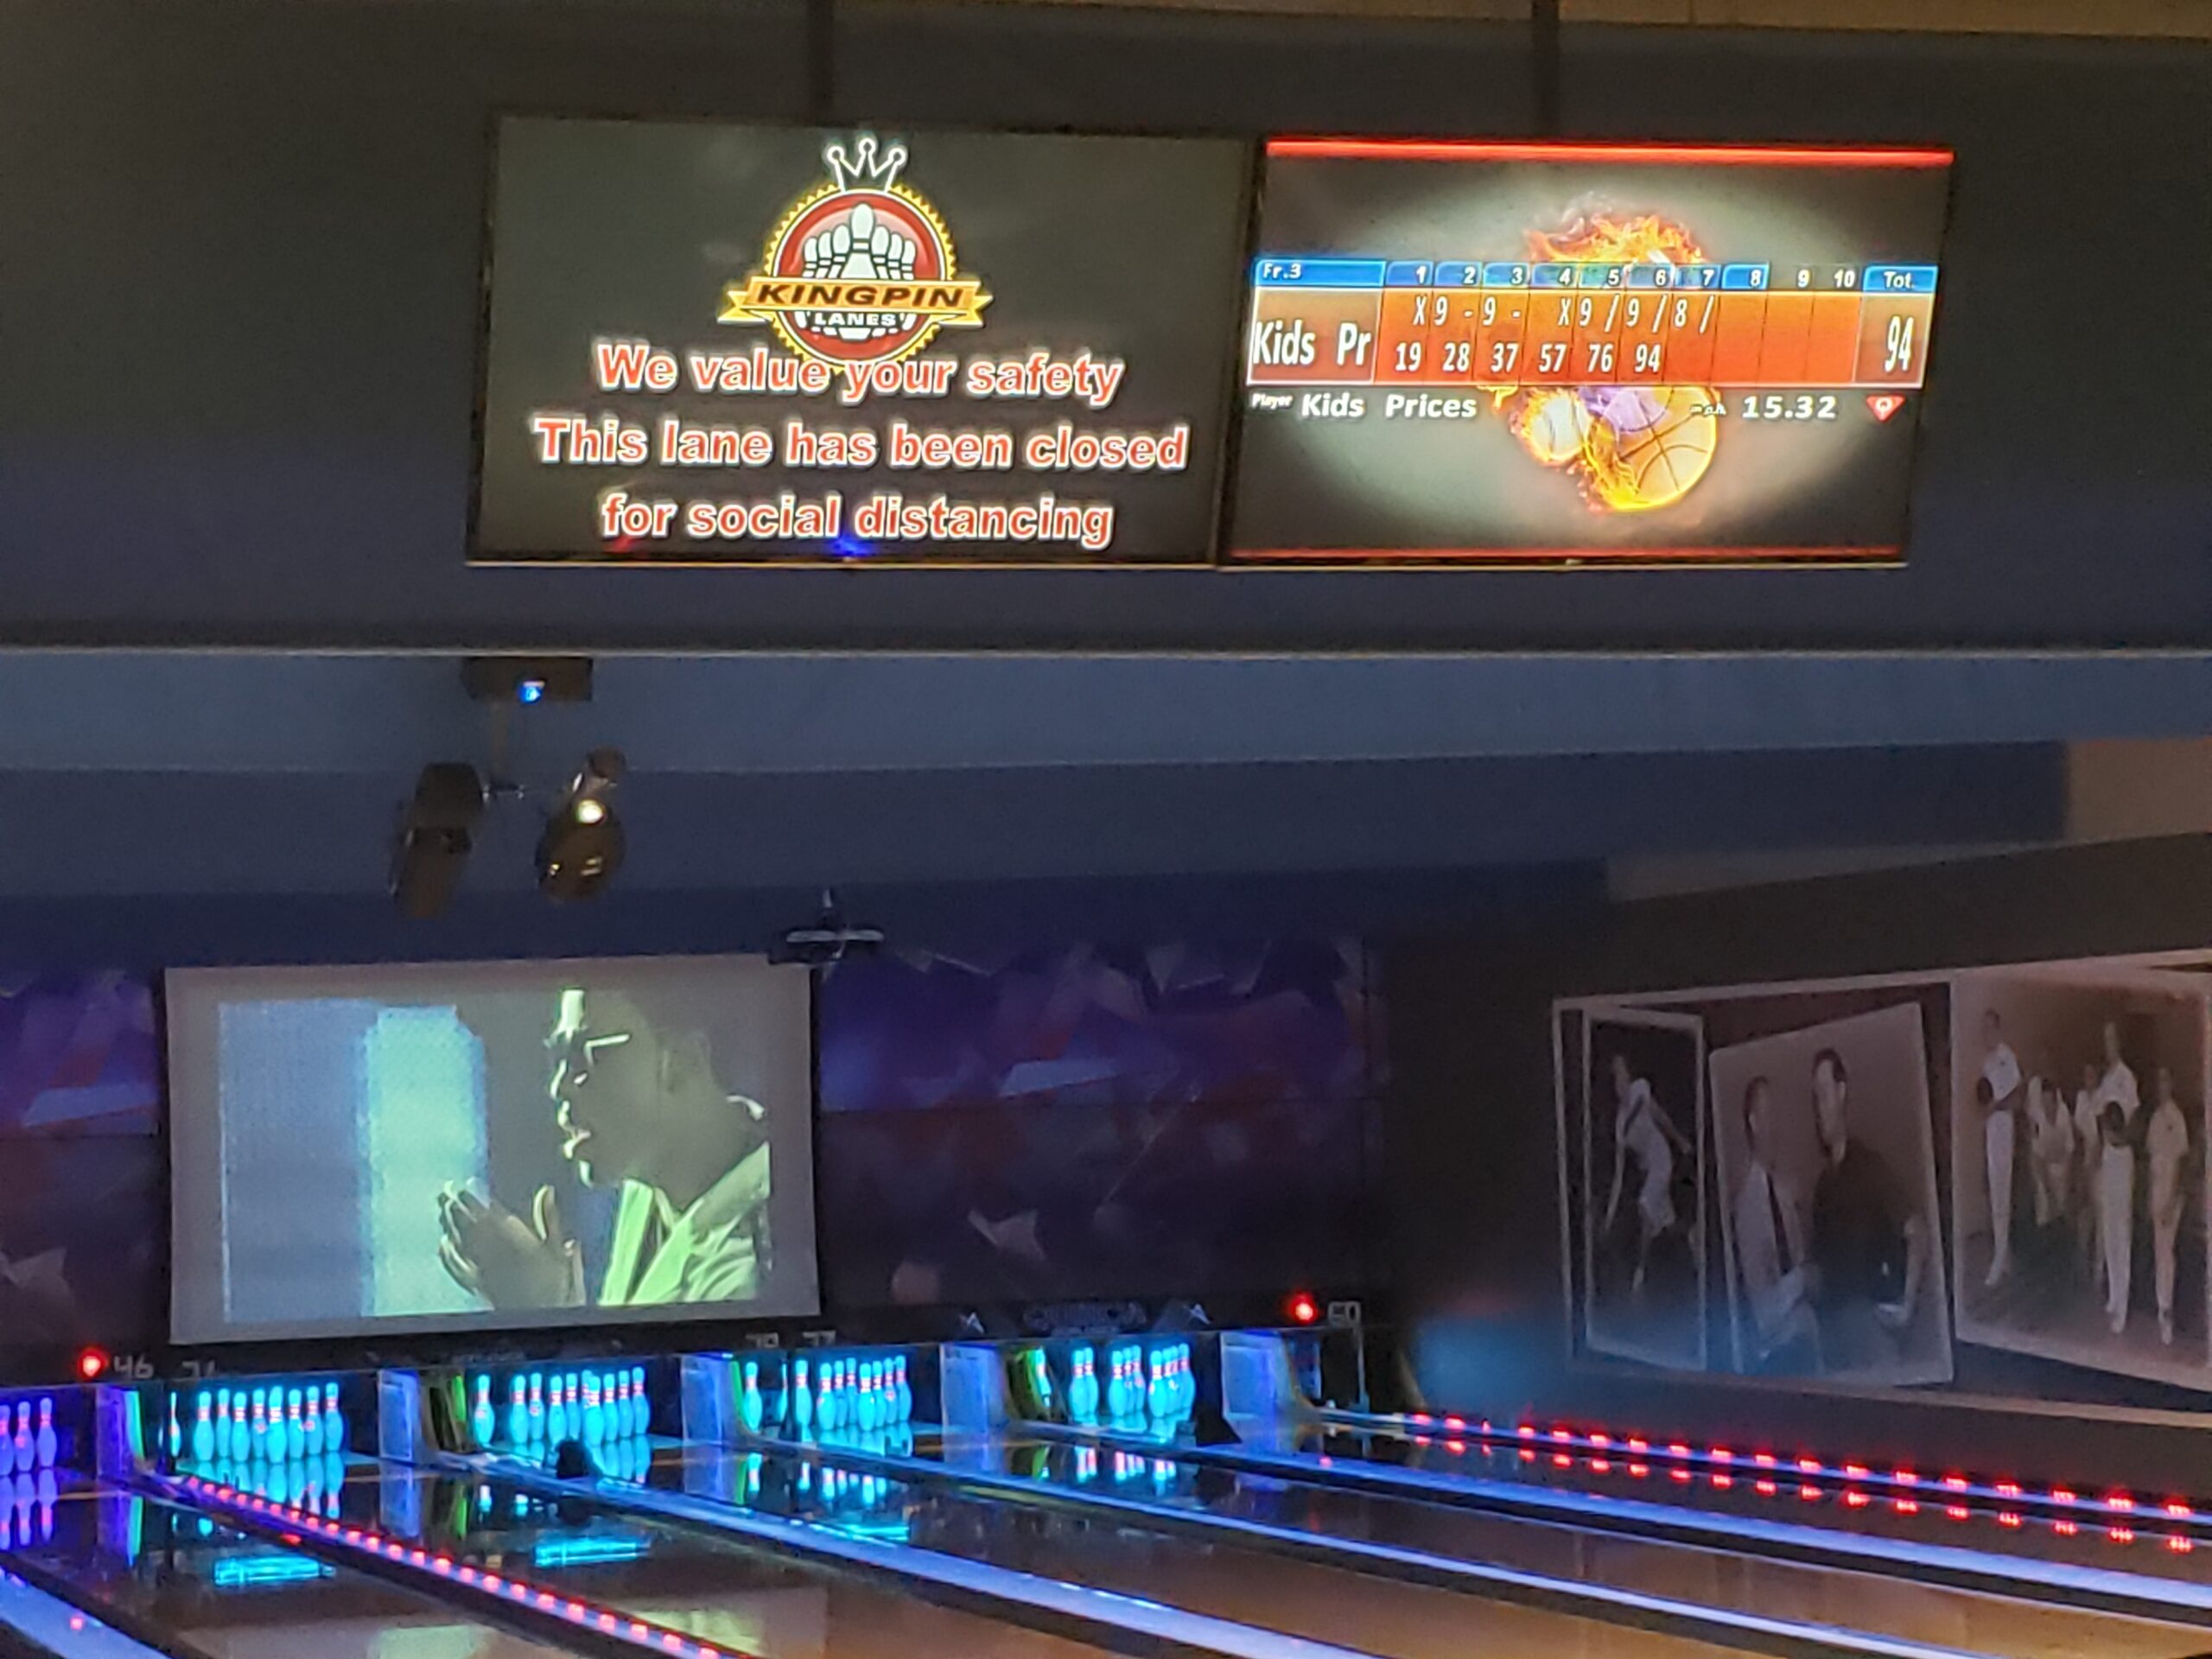 kingpin bowling portland oregon